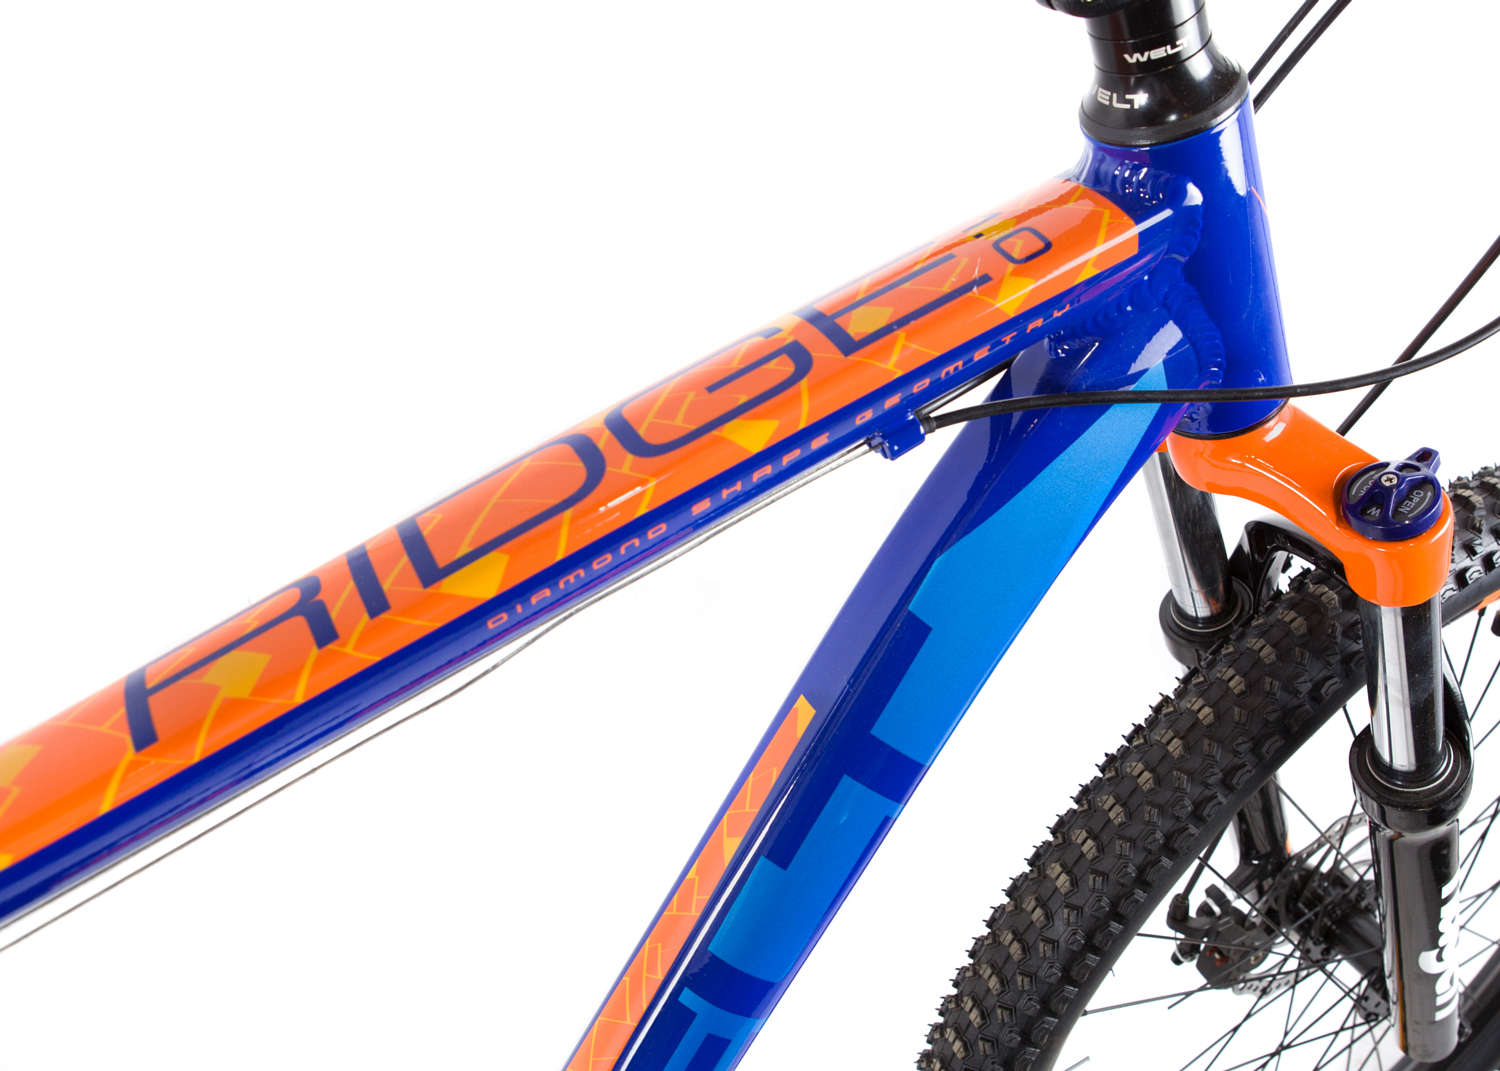 Велосипед Welt Ridge 1.0 D 2019 dark blue/orange